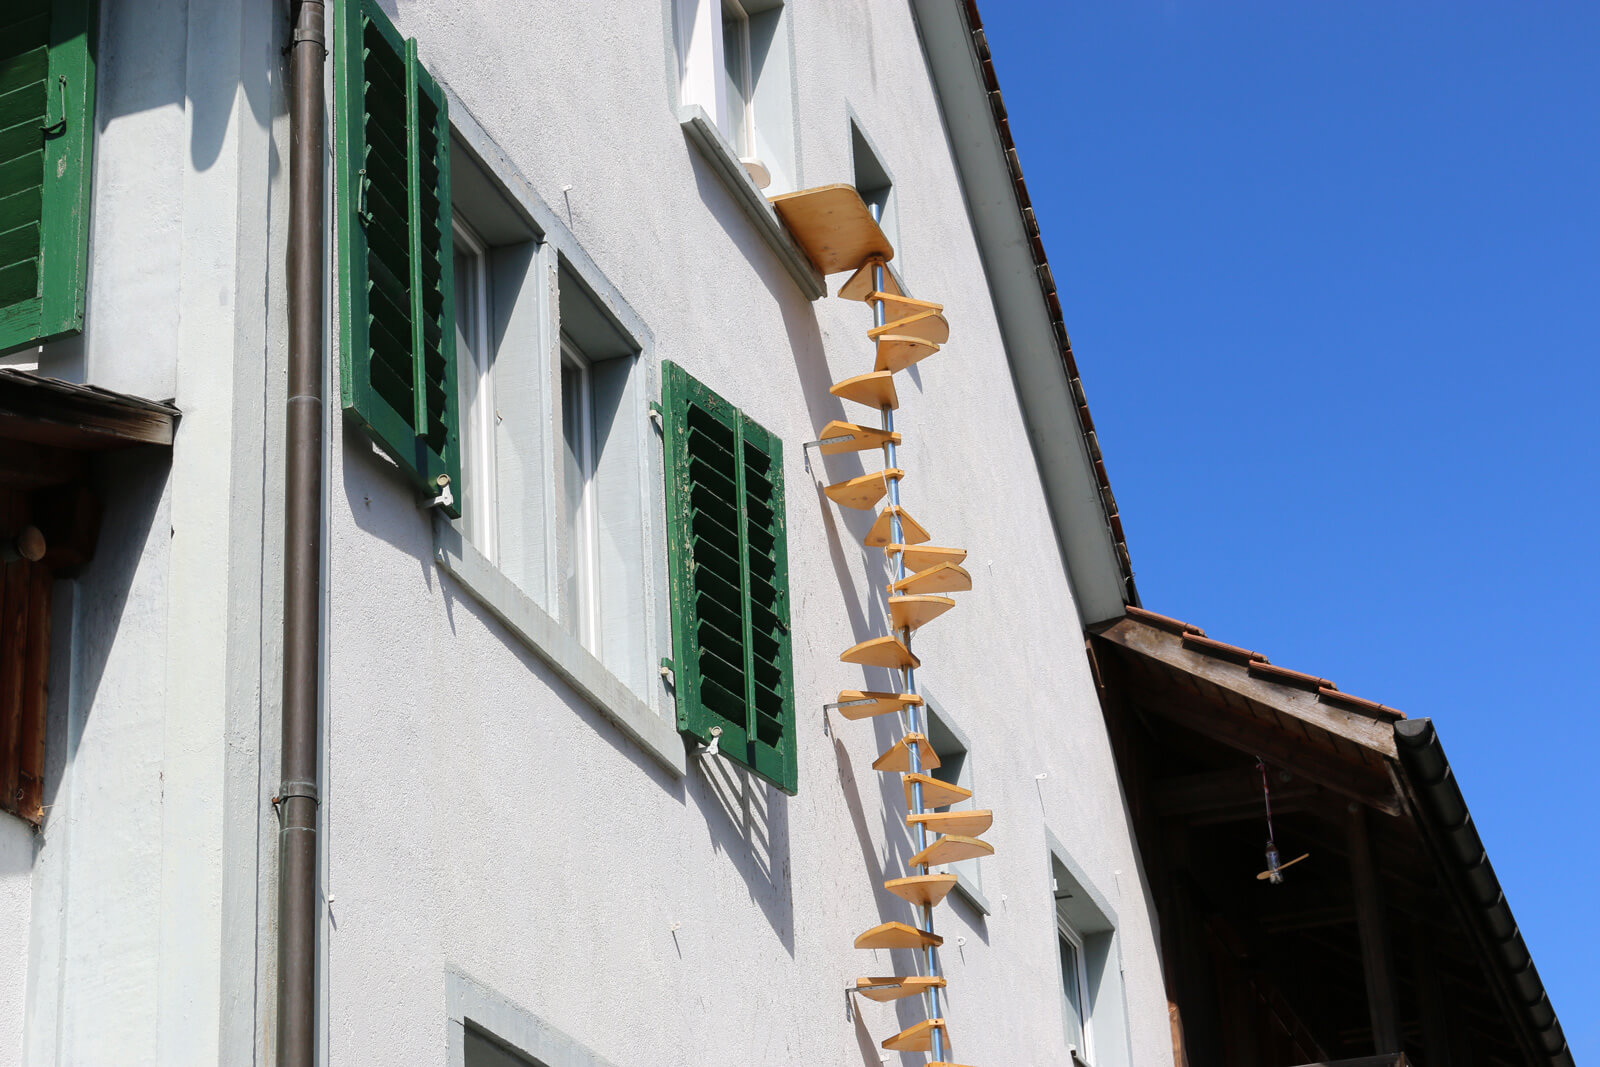 Scary cat ladders in Switzerland